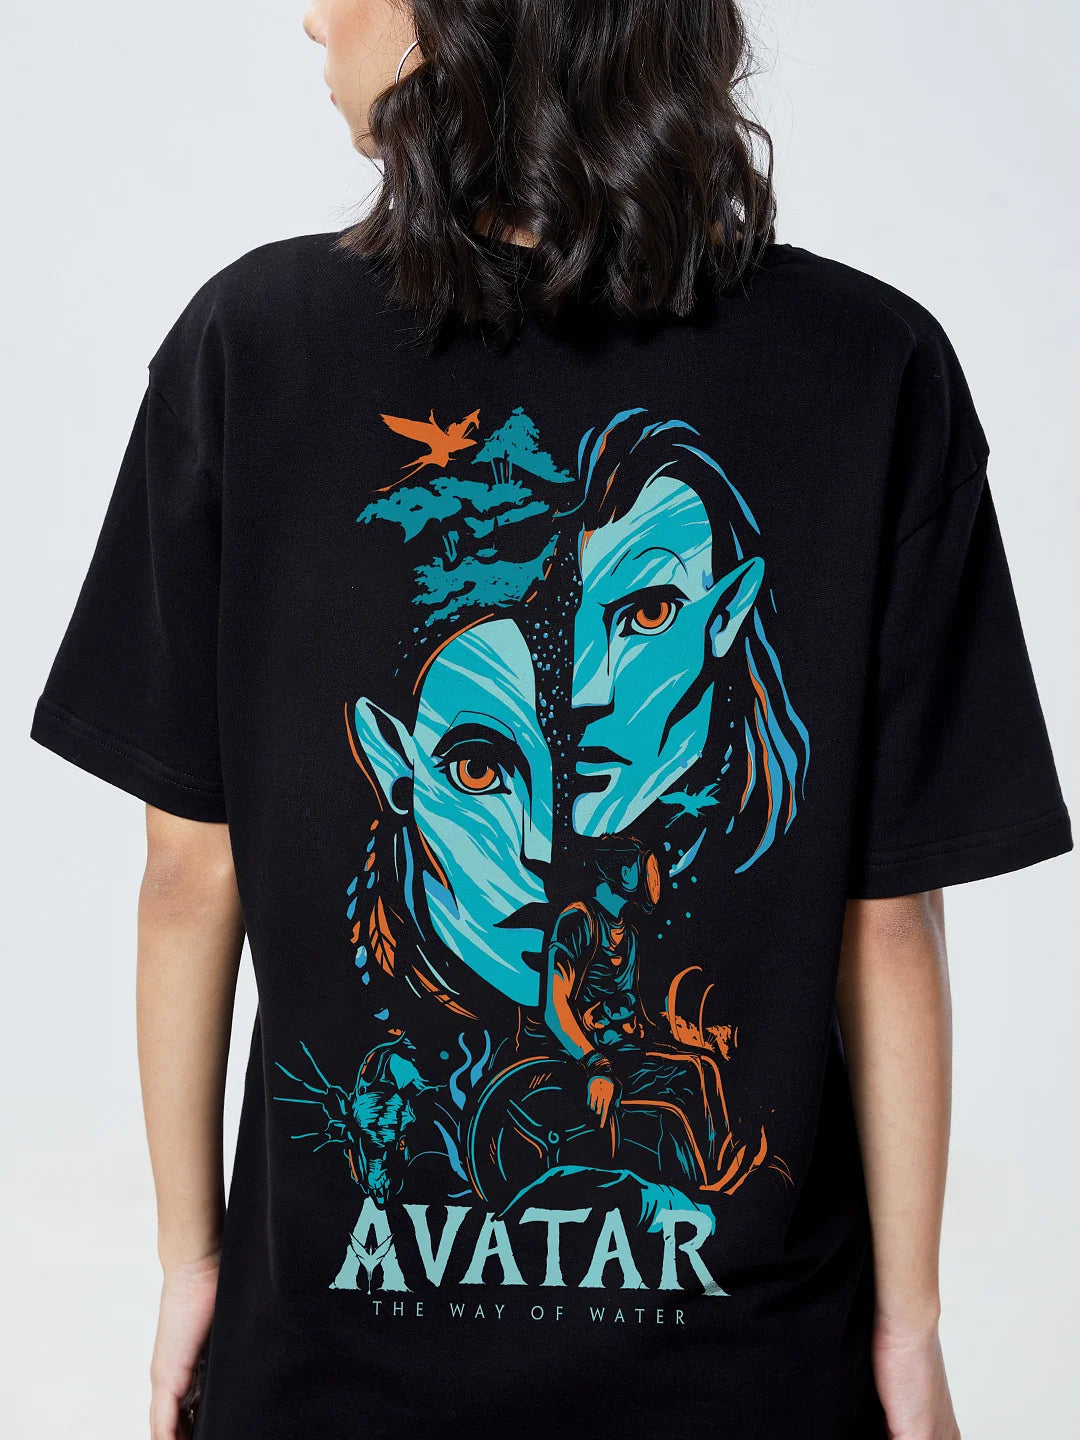 Avatar The Way (UK version)